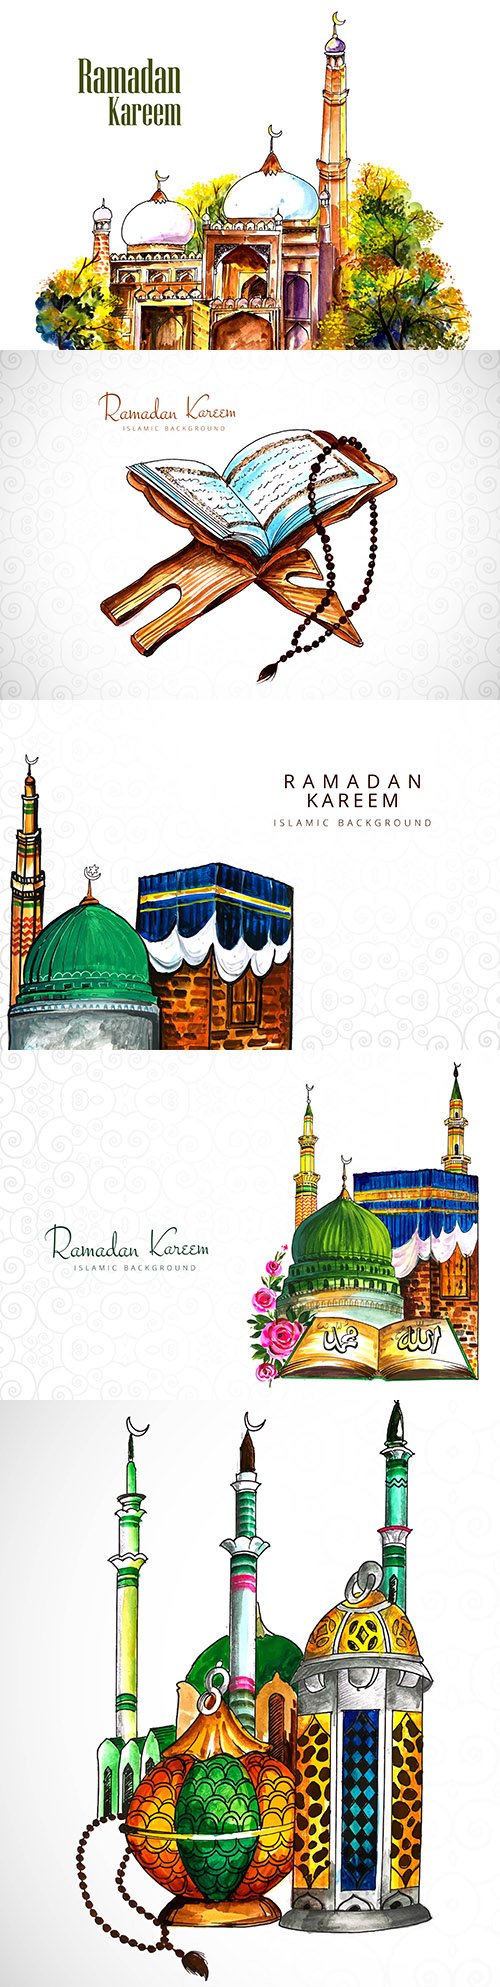 Ramadan Kareem illustration design with mosque